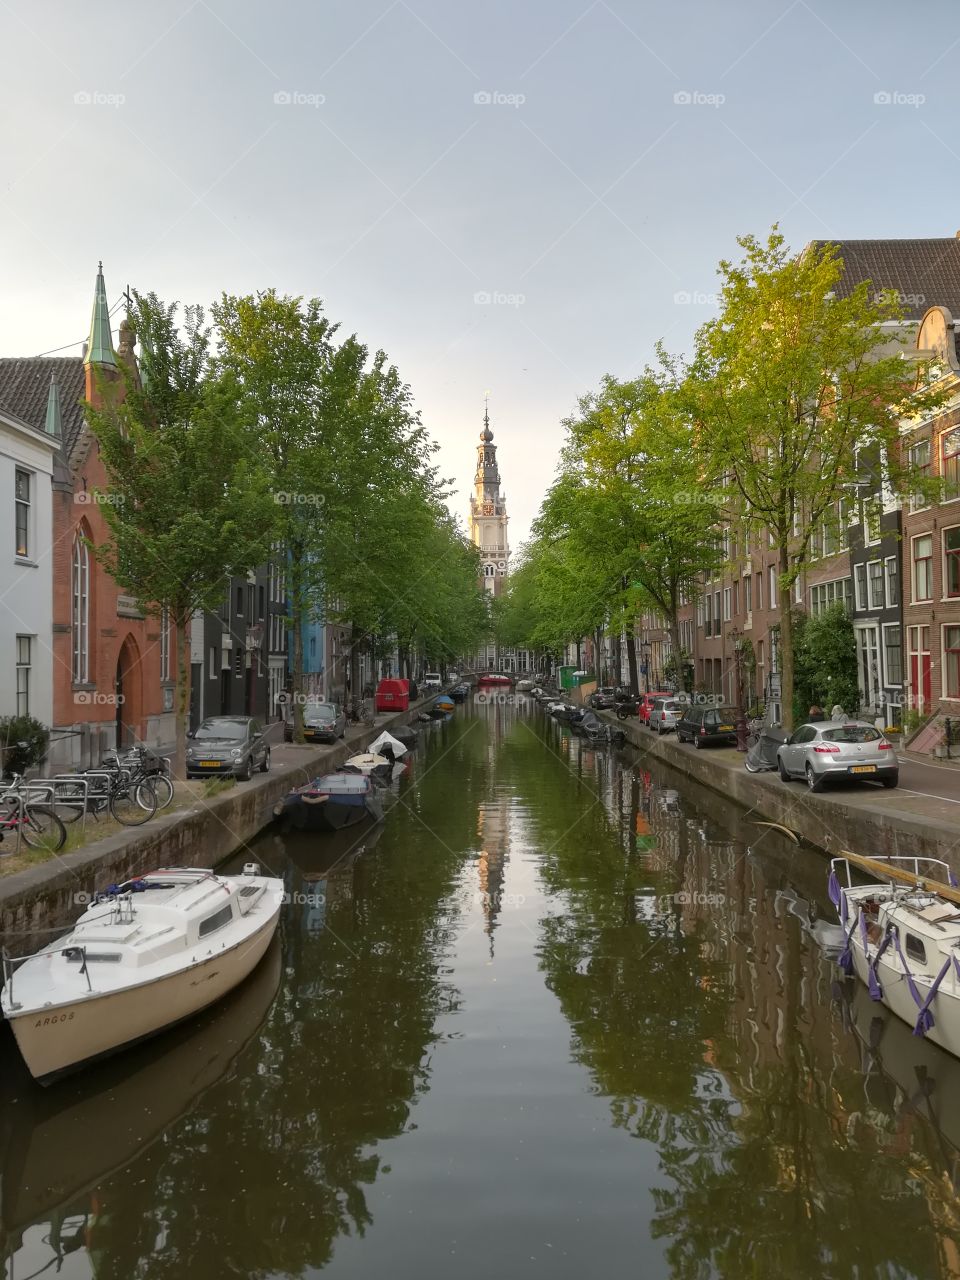 Amsterdam water trees church